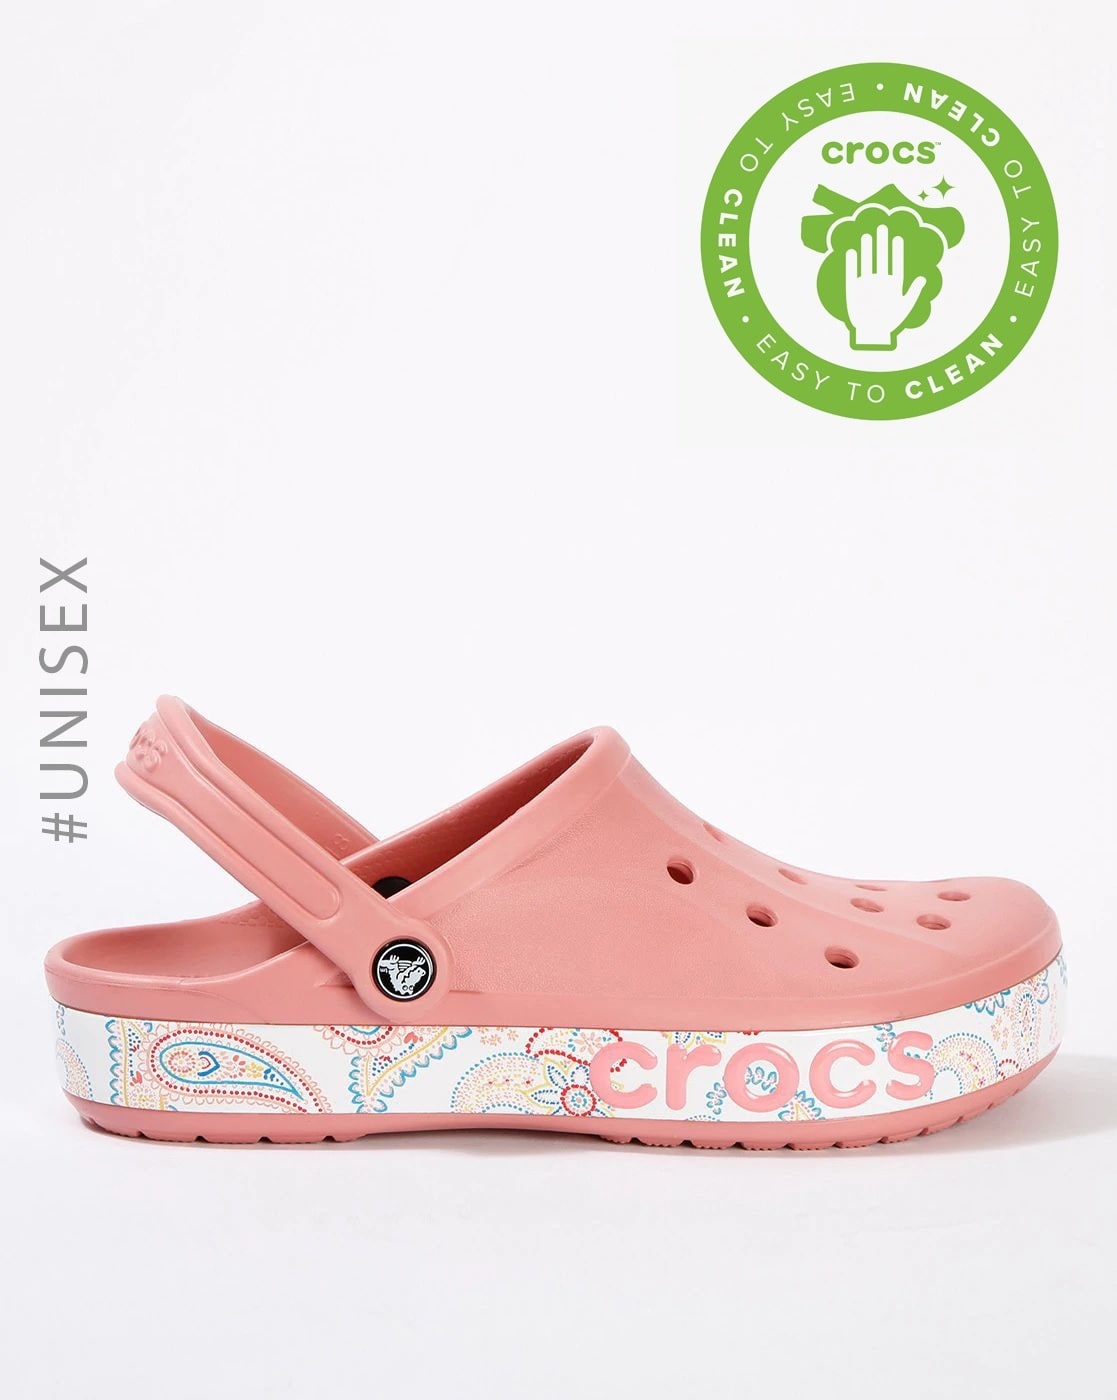 crocs for ladies online